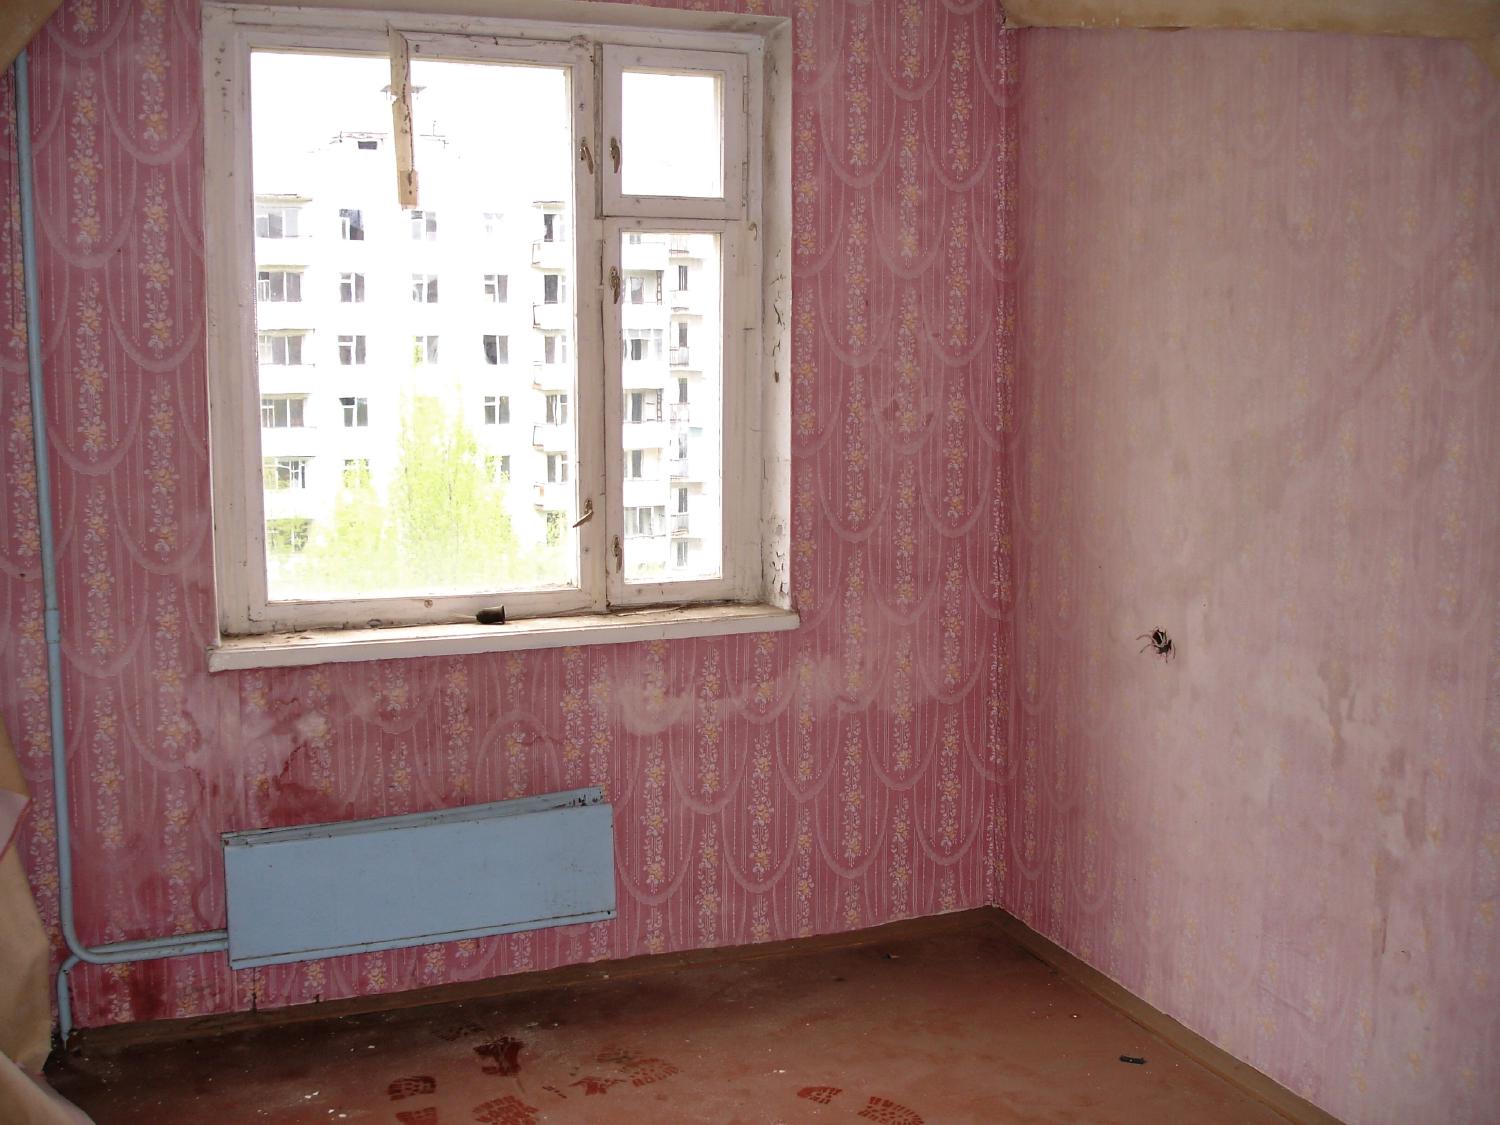 Typical Soviet apartment